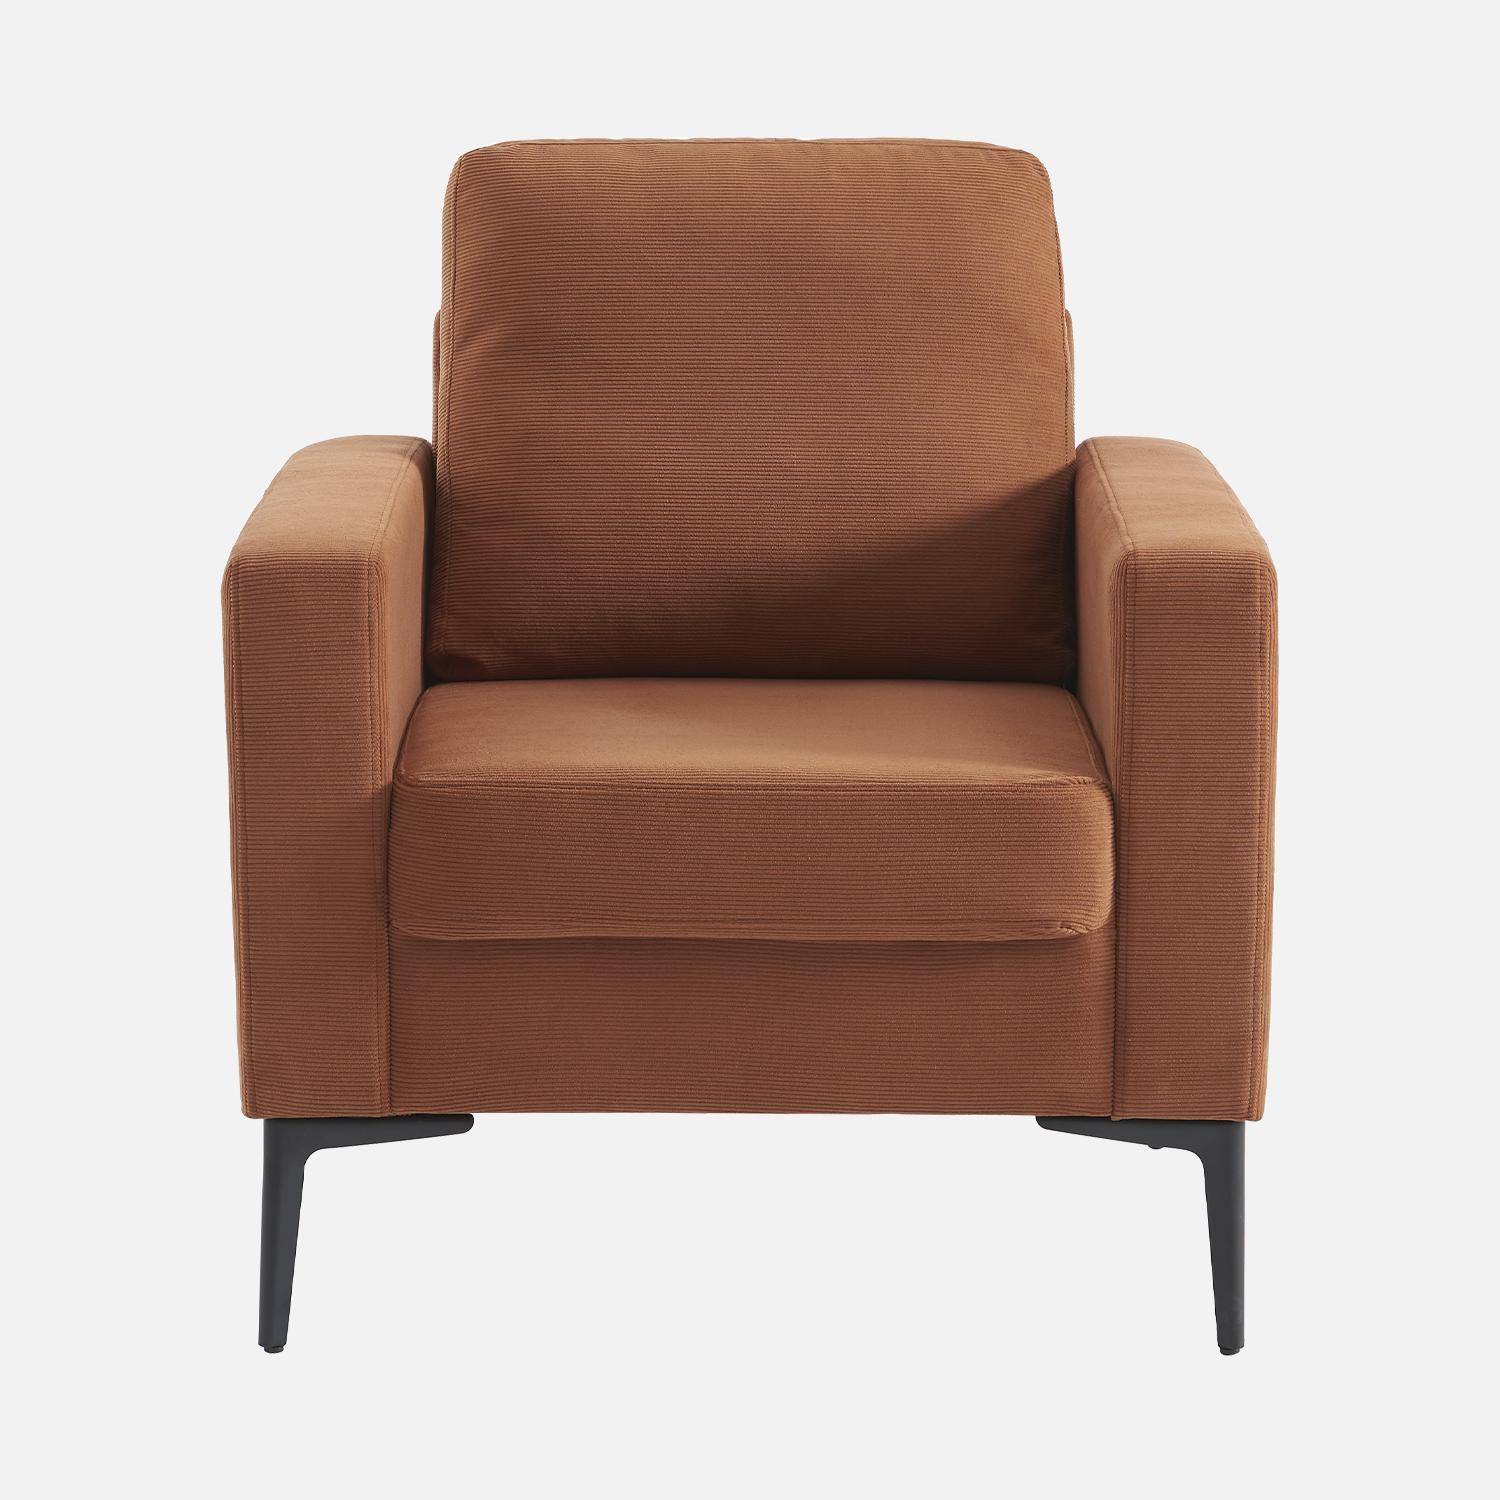 Sessel mit Kord-Bezug  - Terrakotta - Bjorn - mit geraden Metallfüßen Photo4